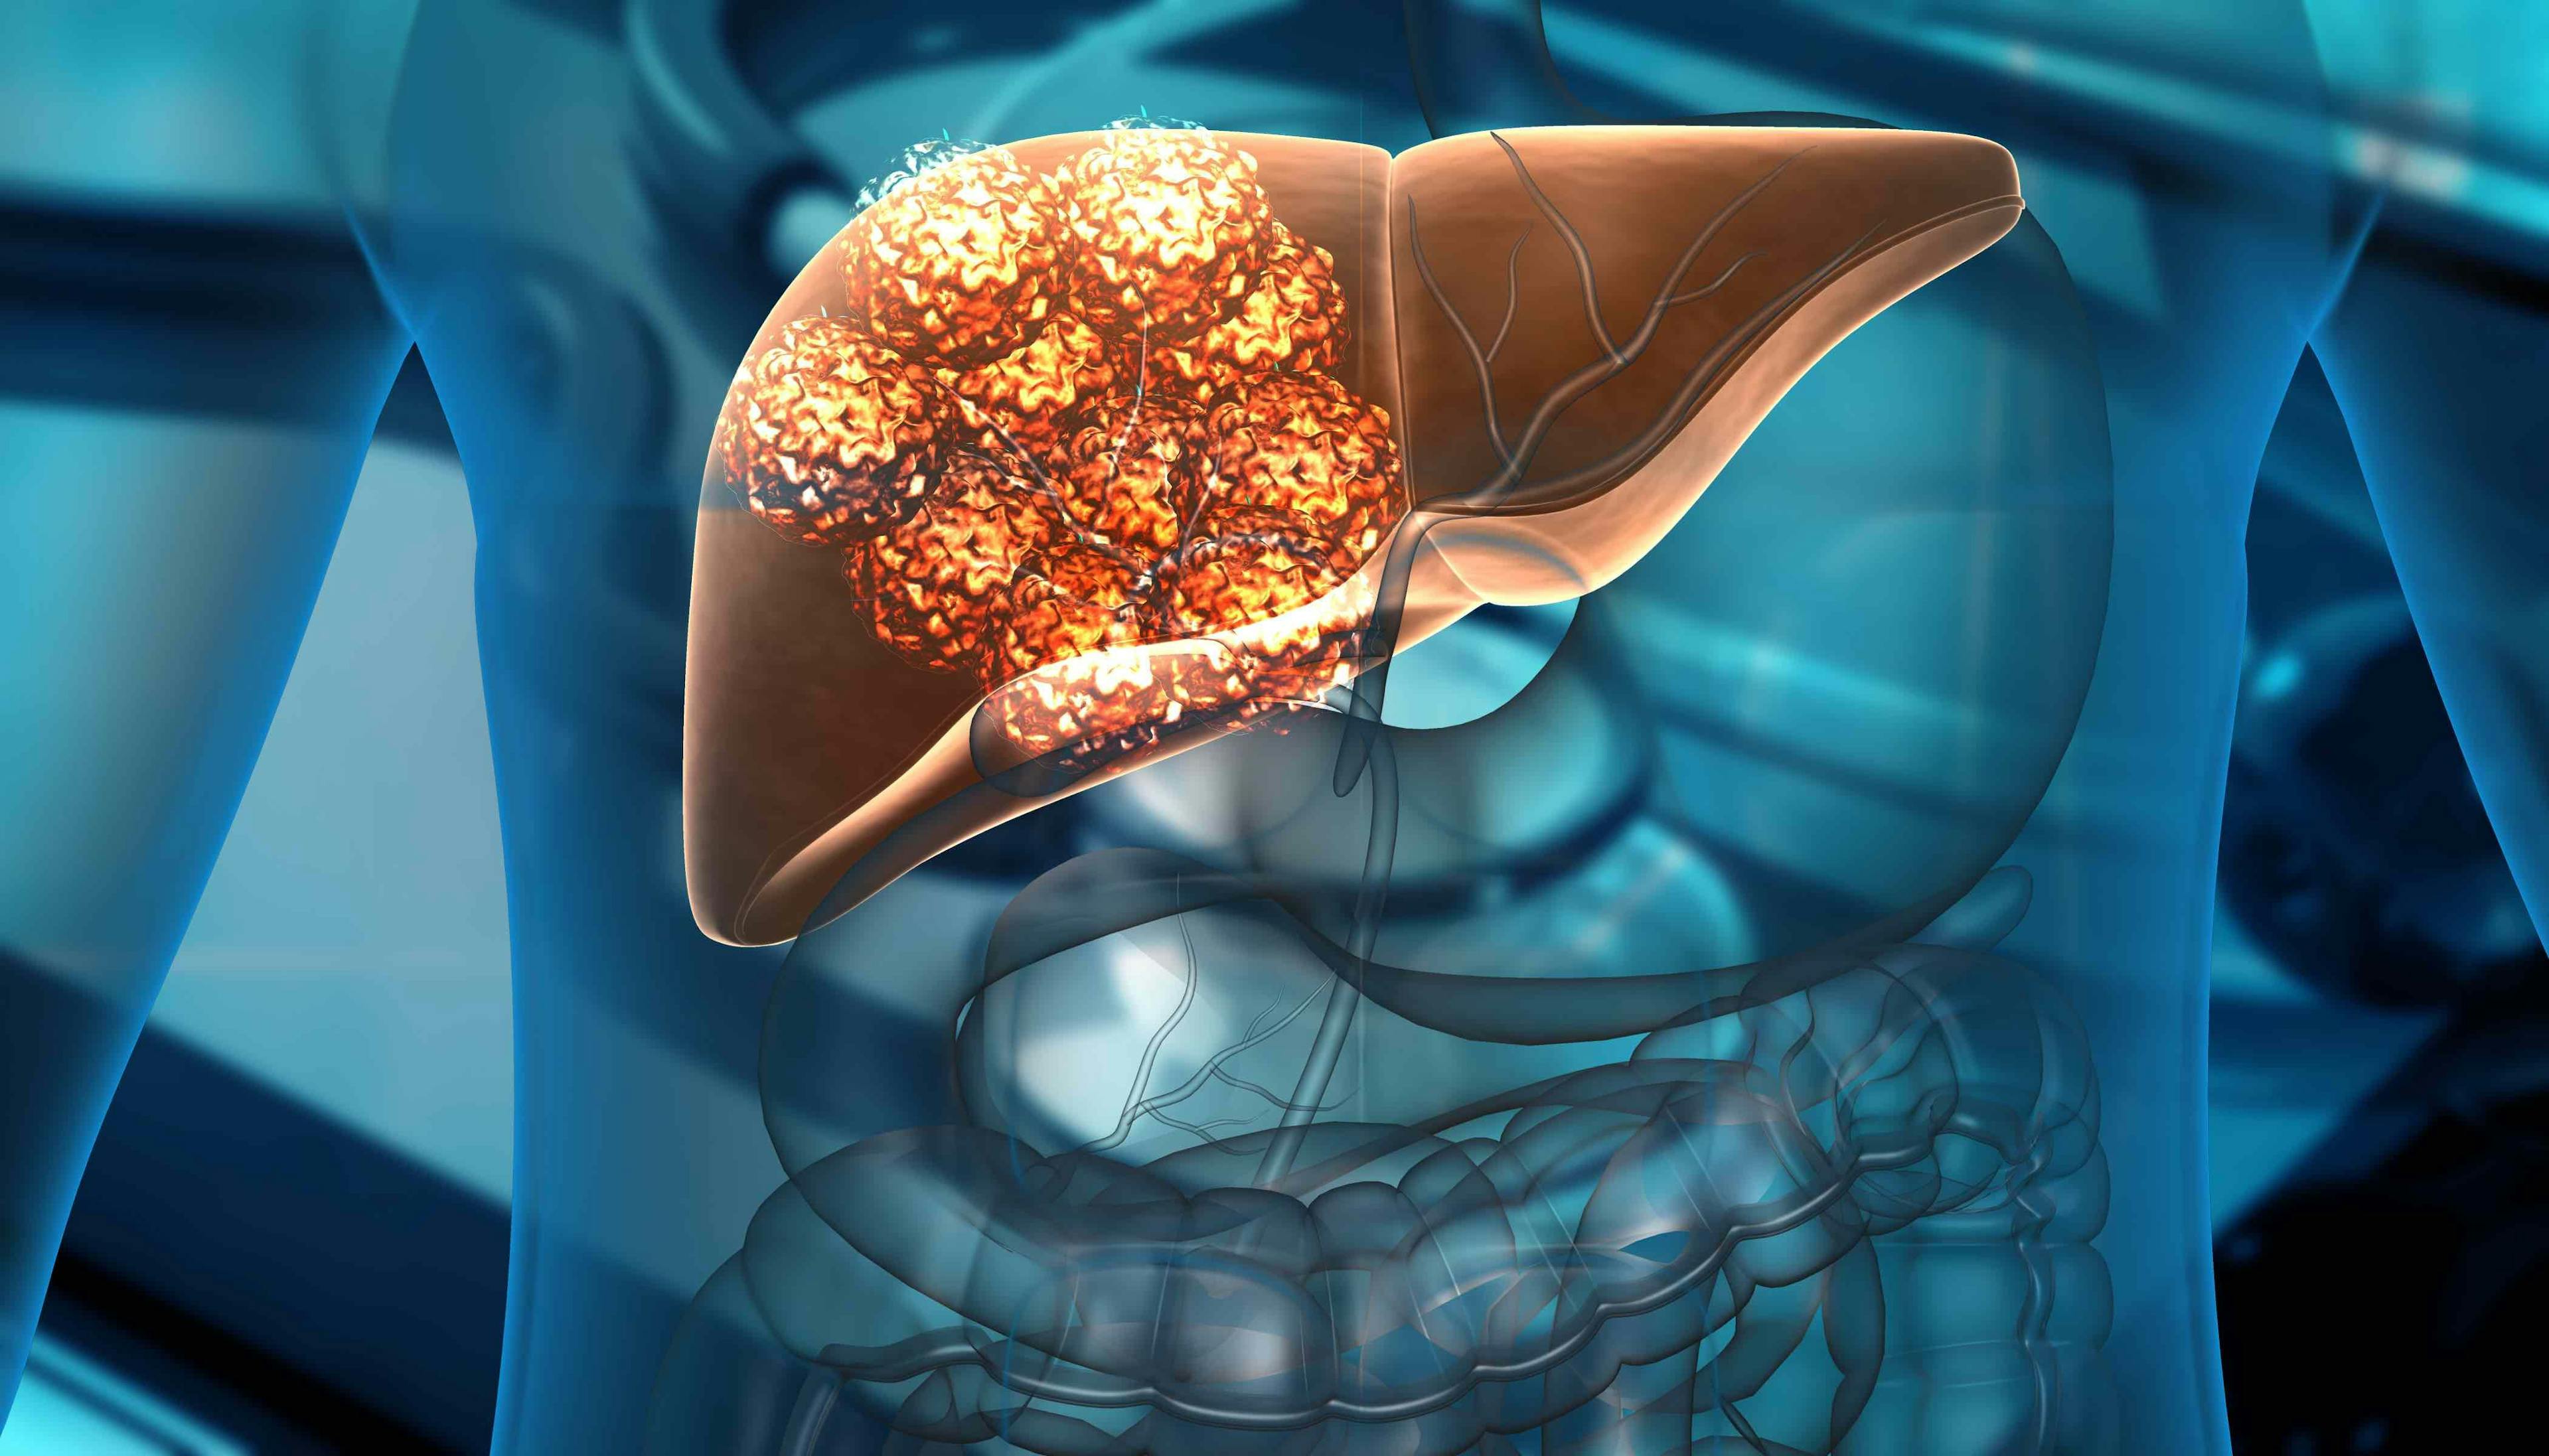 Liver cancer | Image credit: Rasi - stock.adobe.com